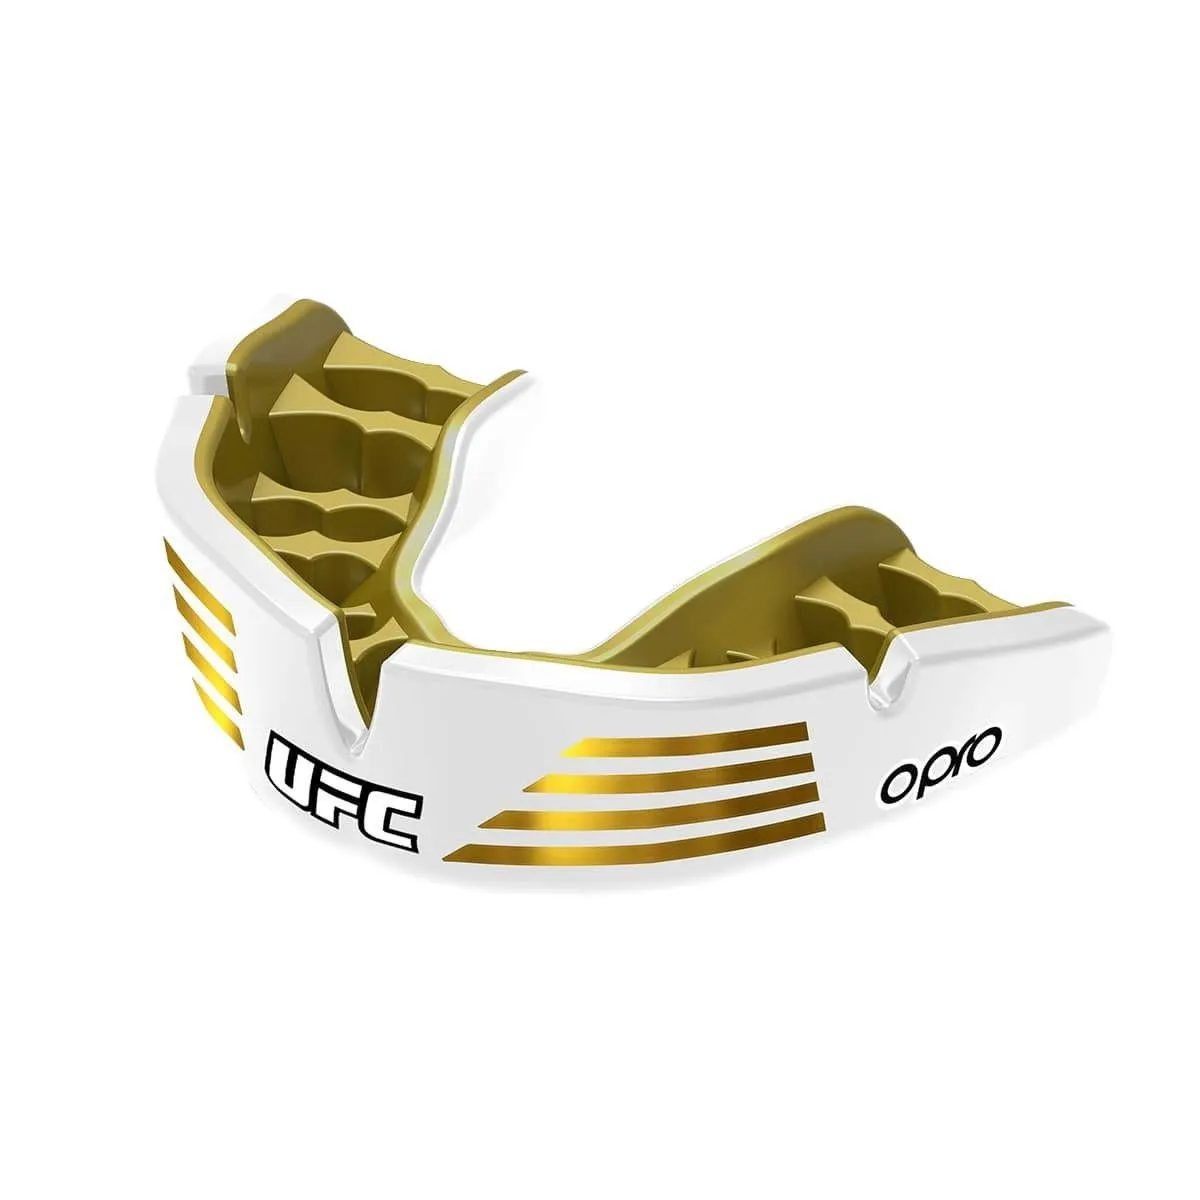 OPRO "UFC" tandbeskytter Insten Custom FIT guld/hvid